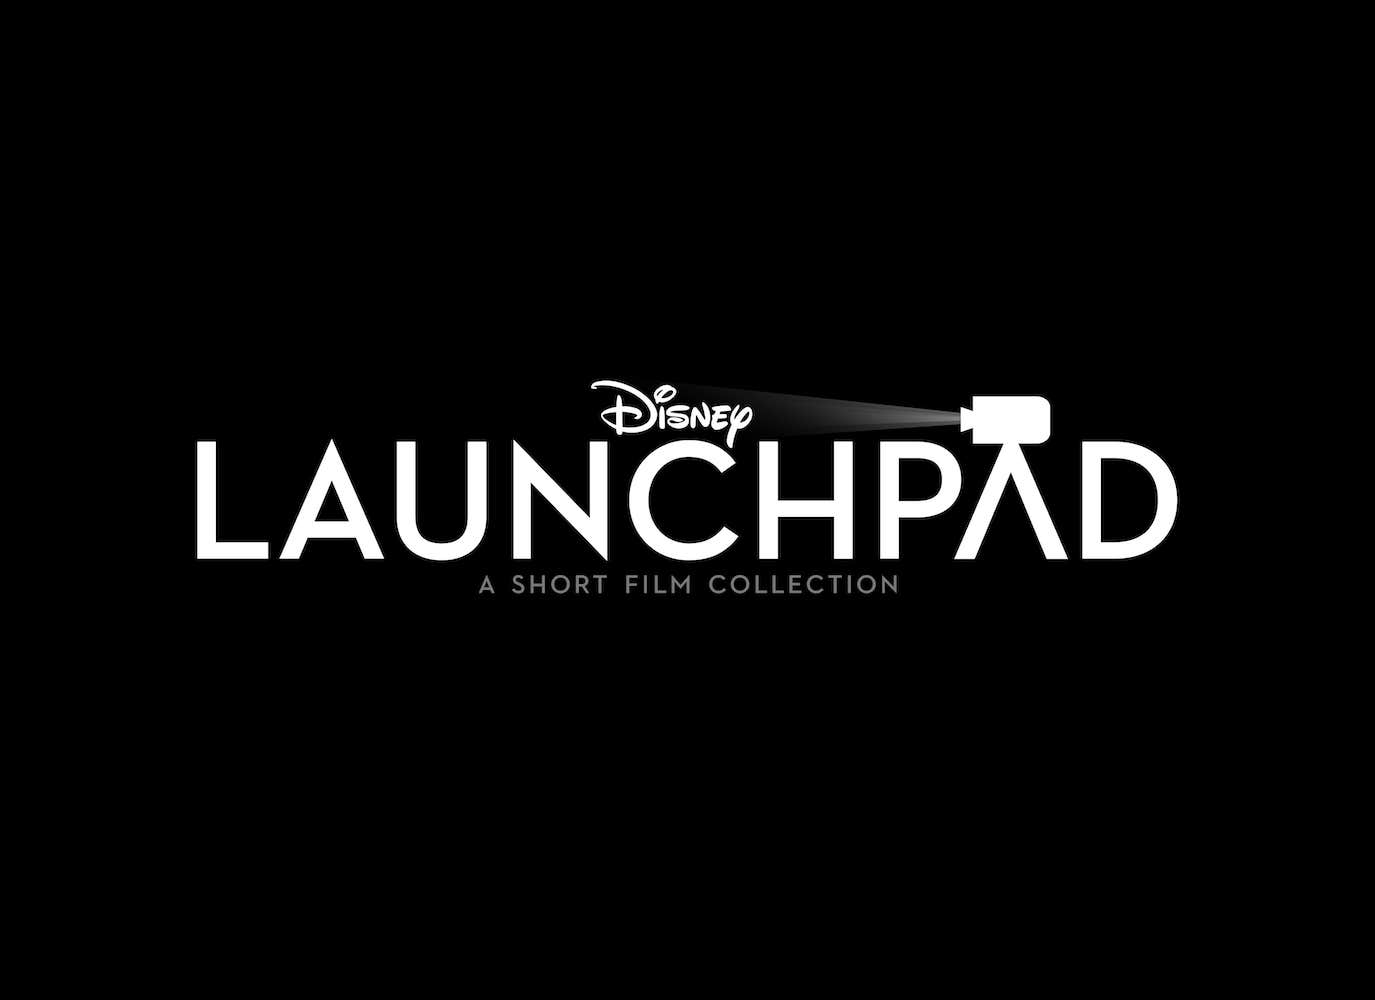 Disney's Launchpad